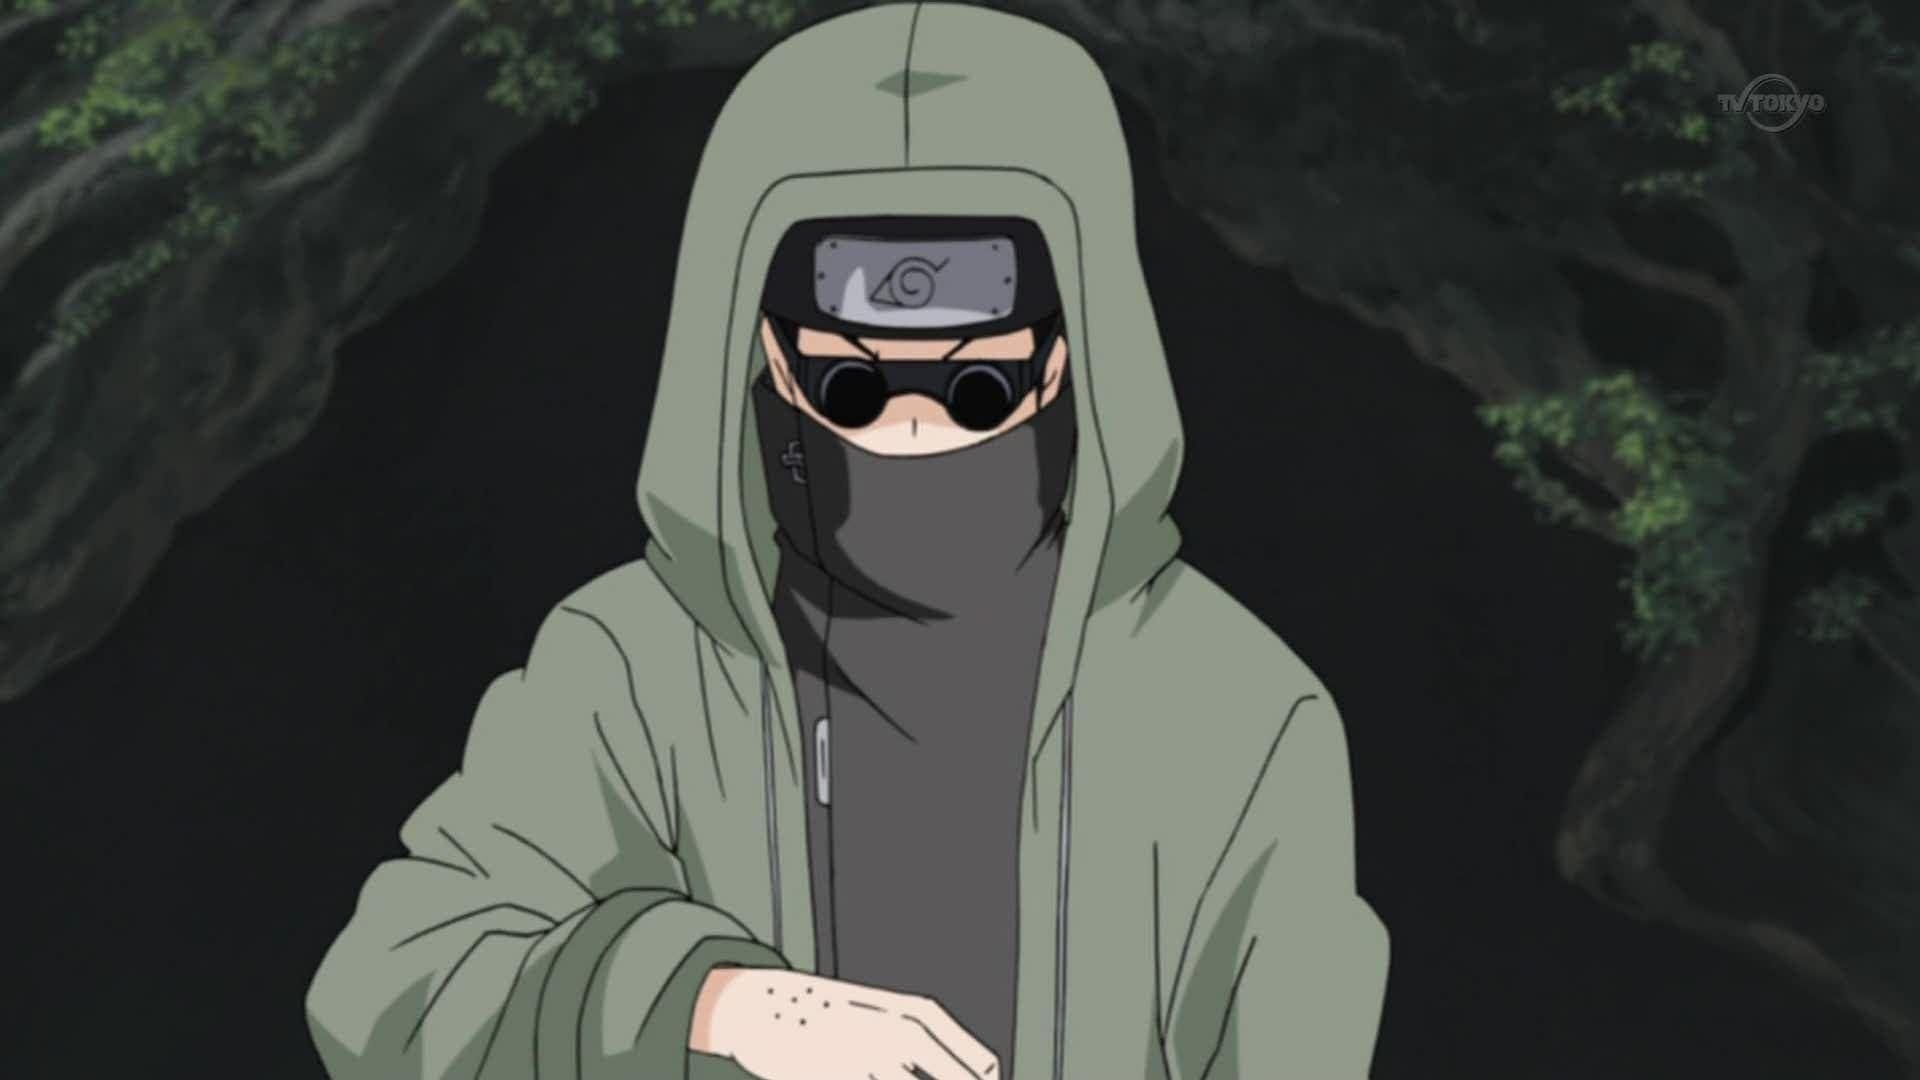 Shino Aburame, as seen in the anime Naruto (Image via Studio Pierrot)